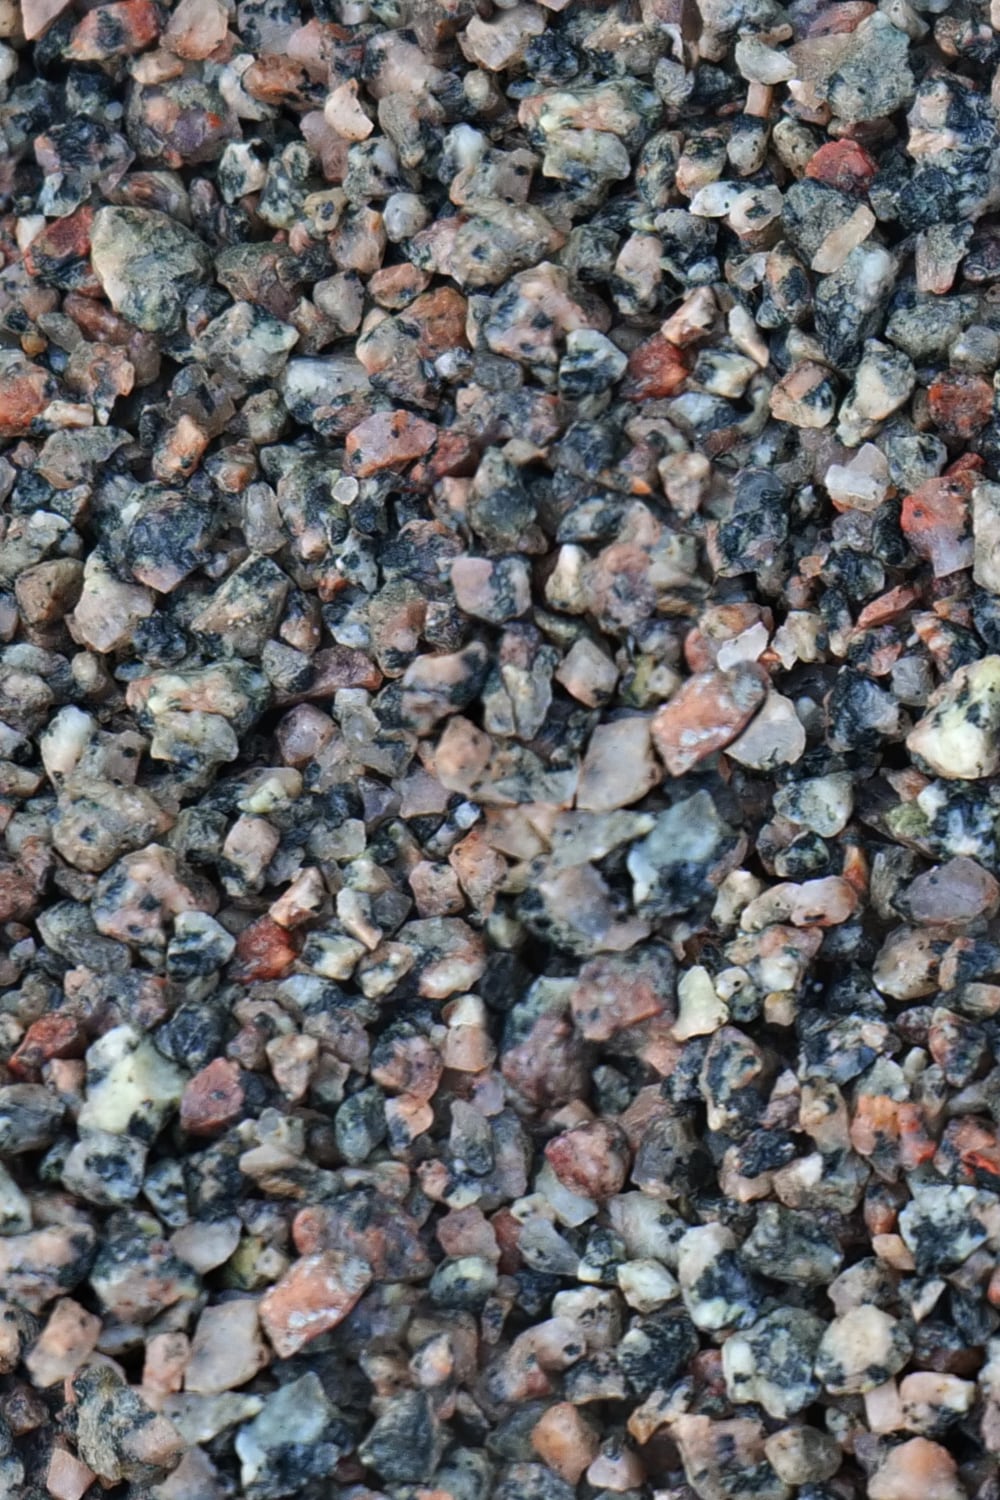 Coarse gravel close-up